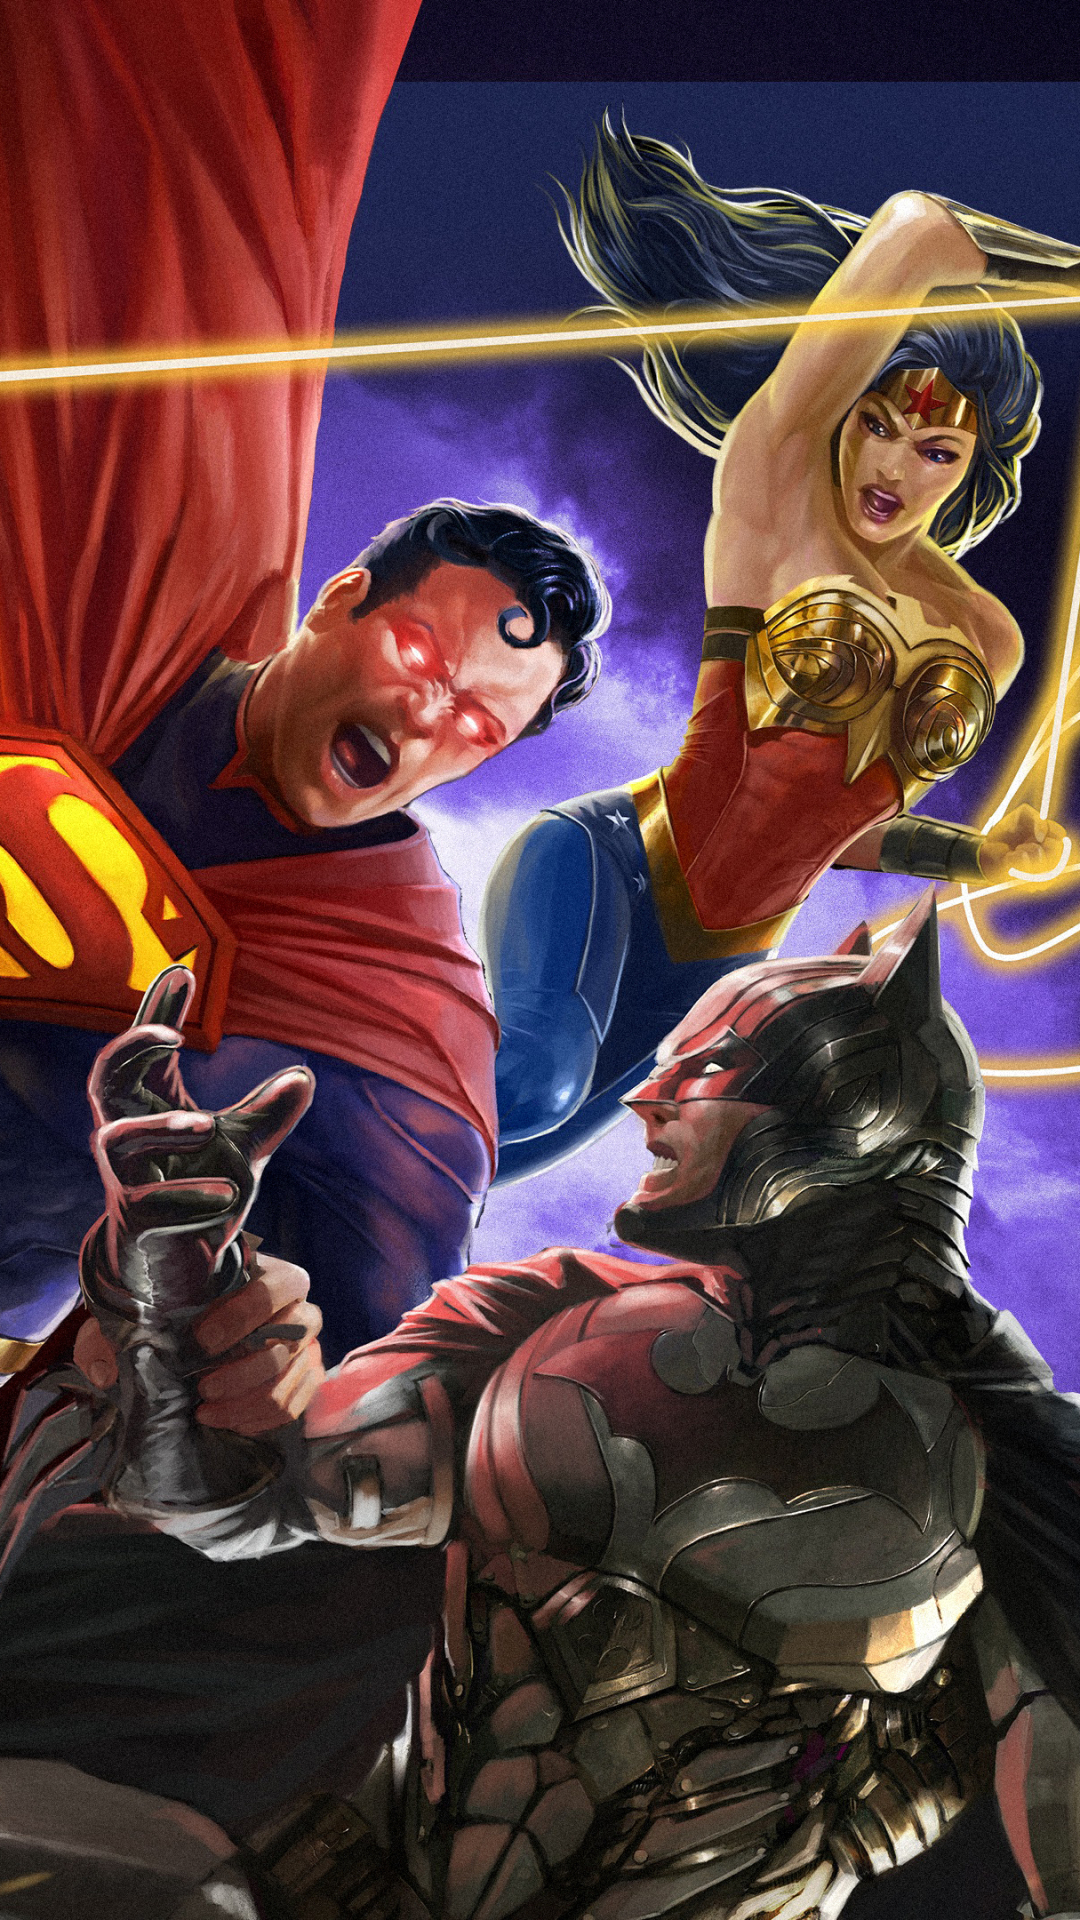 Descarga gratuita de fondo de pantalla para móvil de Superhombre, Películas, Dc Comics, Hombre Murciélago, La Mujer Maravilla, Mujer Maravilla, Injustice: Gods Among Us.